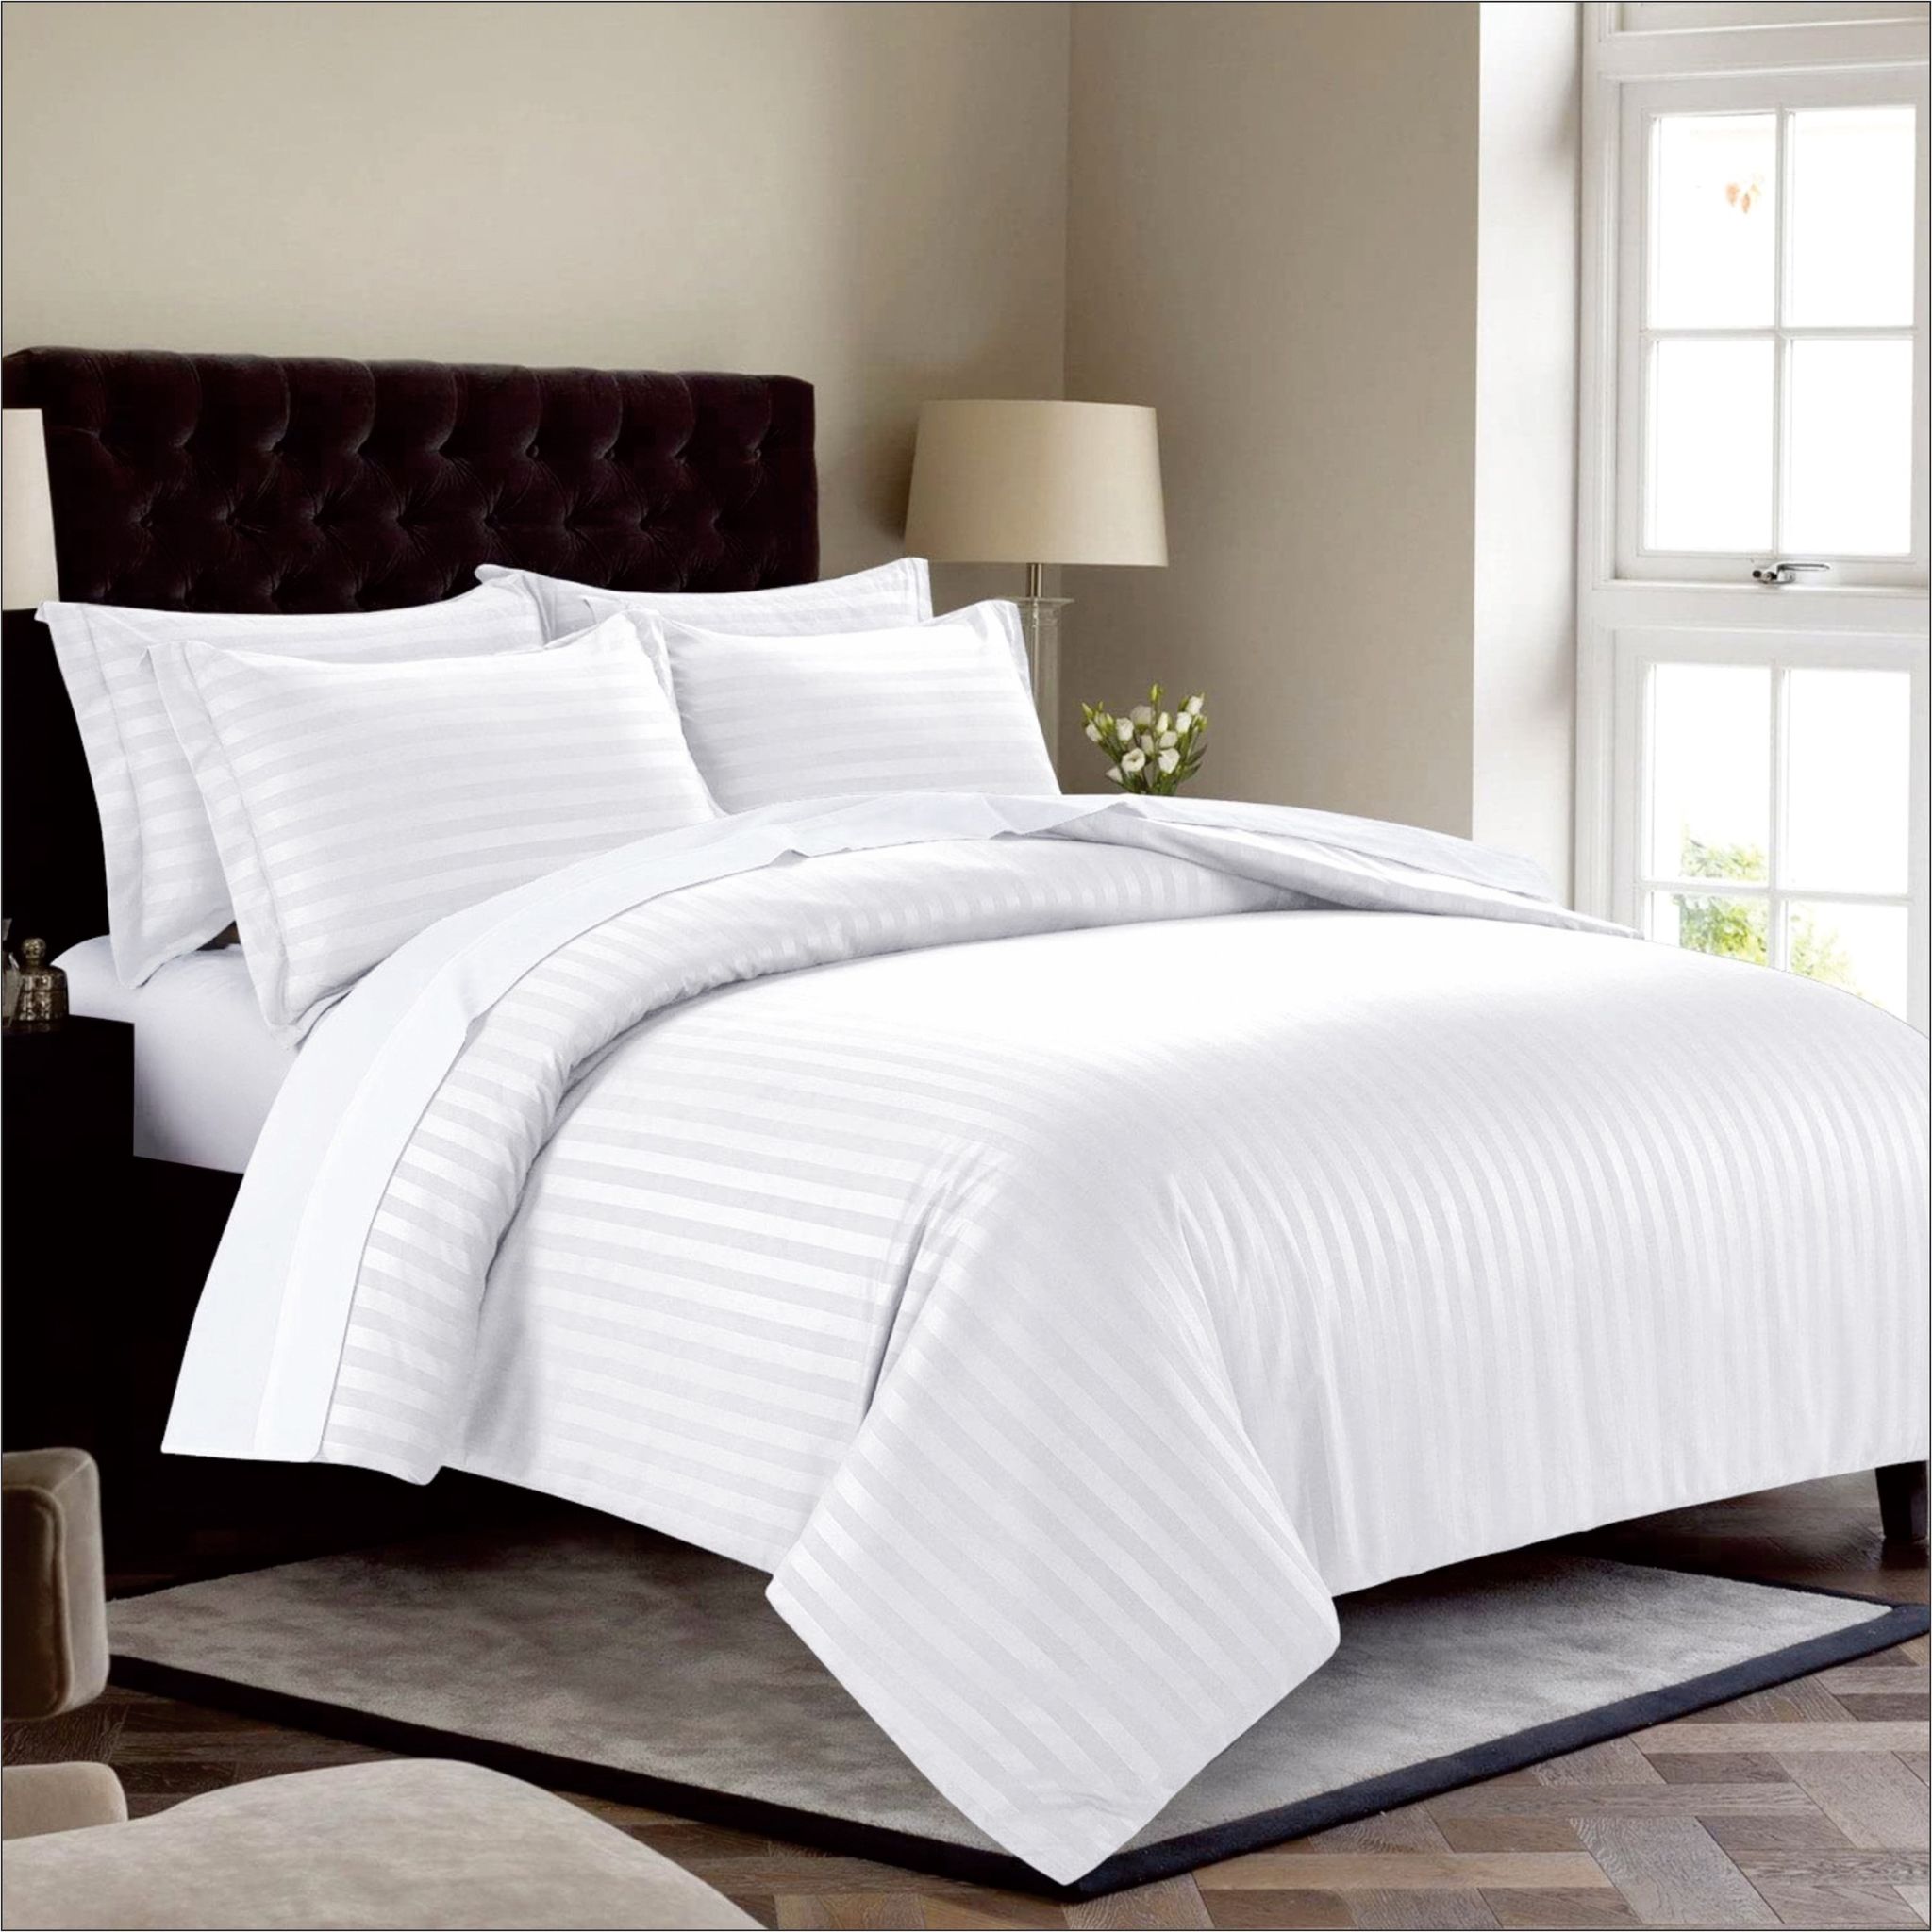 7-Piece Damask Stripes Hotel Style Comforter Microfiber ,Removable Insert ,King 260 x 240 Cms ,Cream